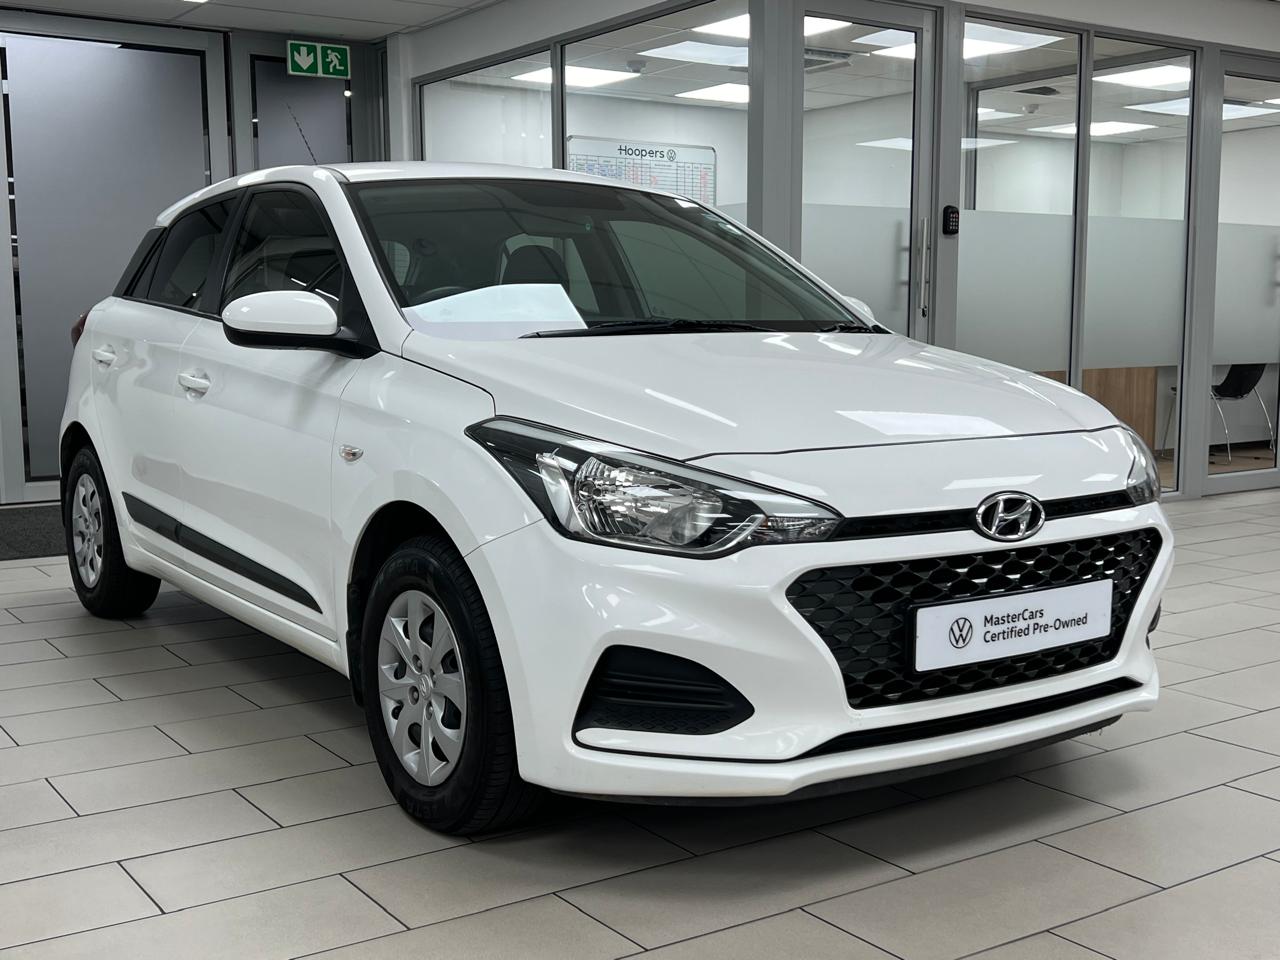 2019 Hyundai i20  for sale - 01HVUNF15447